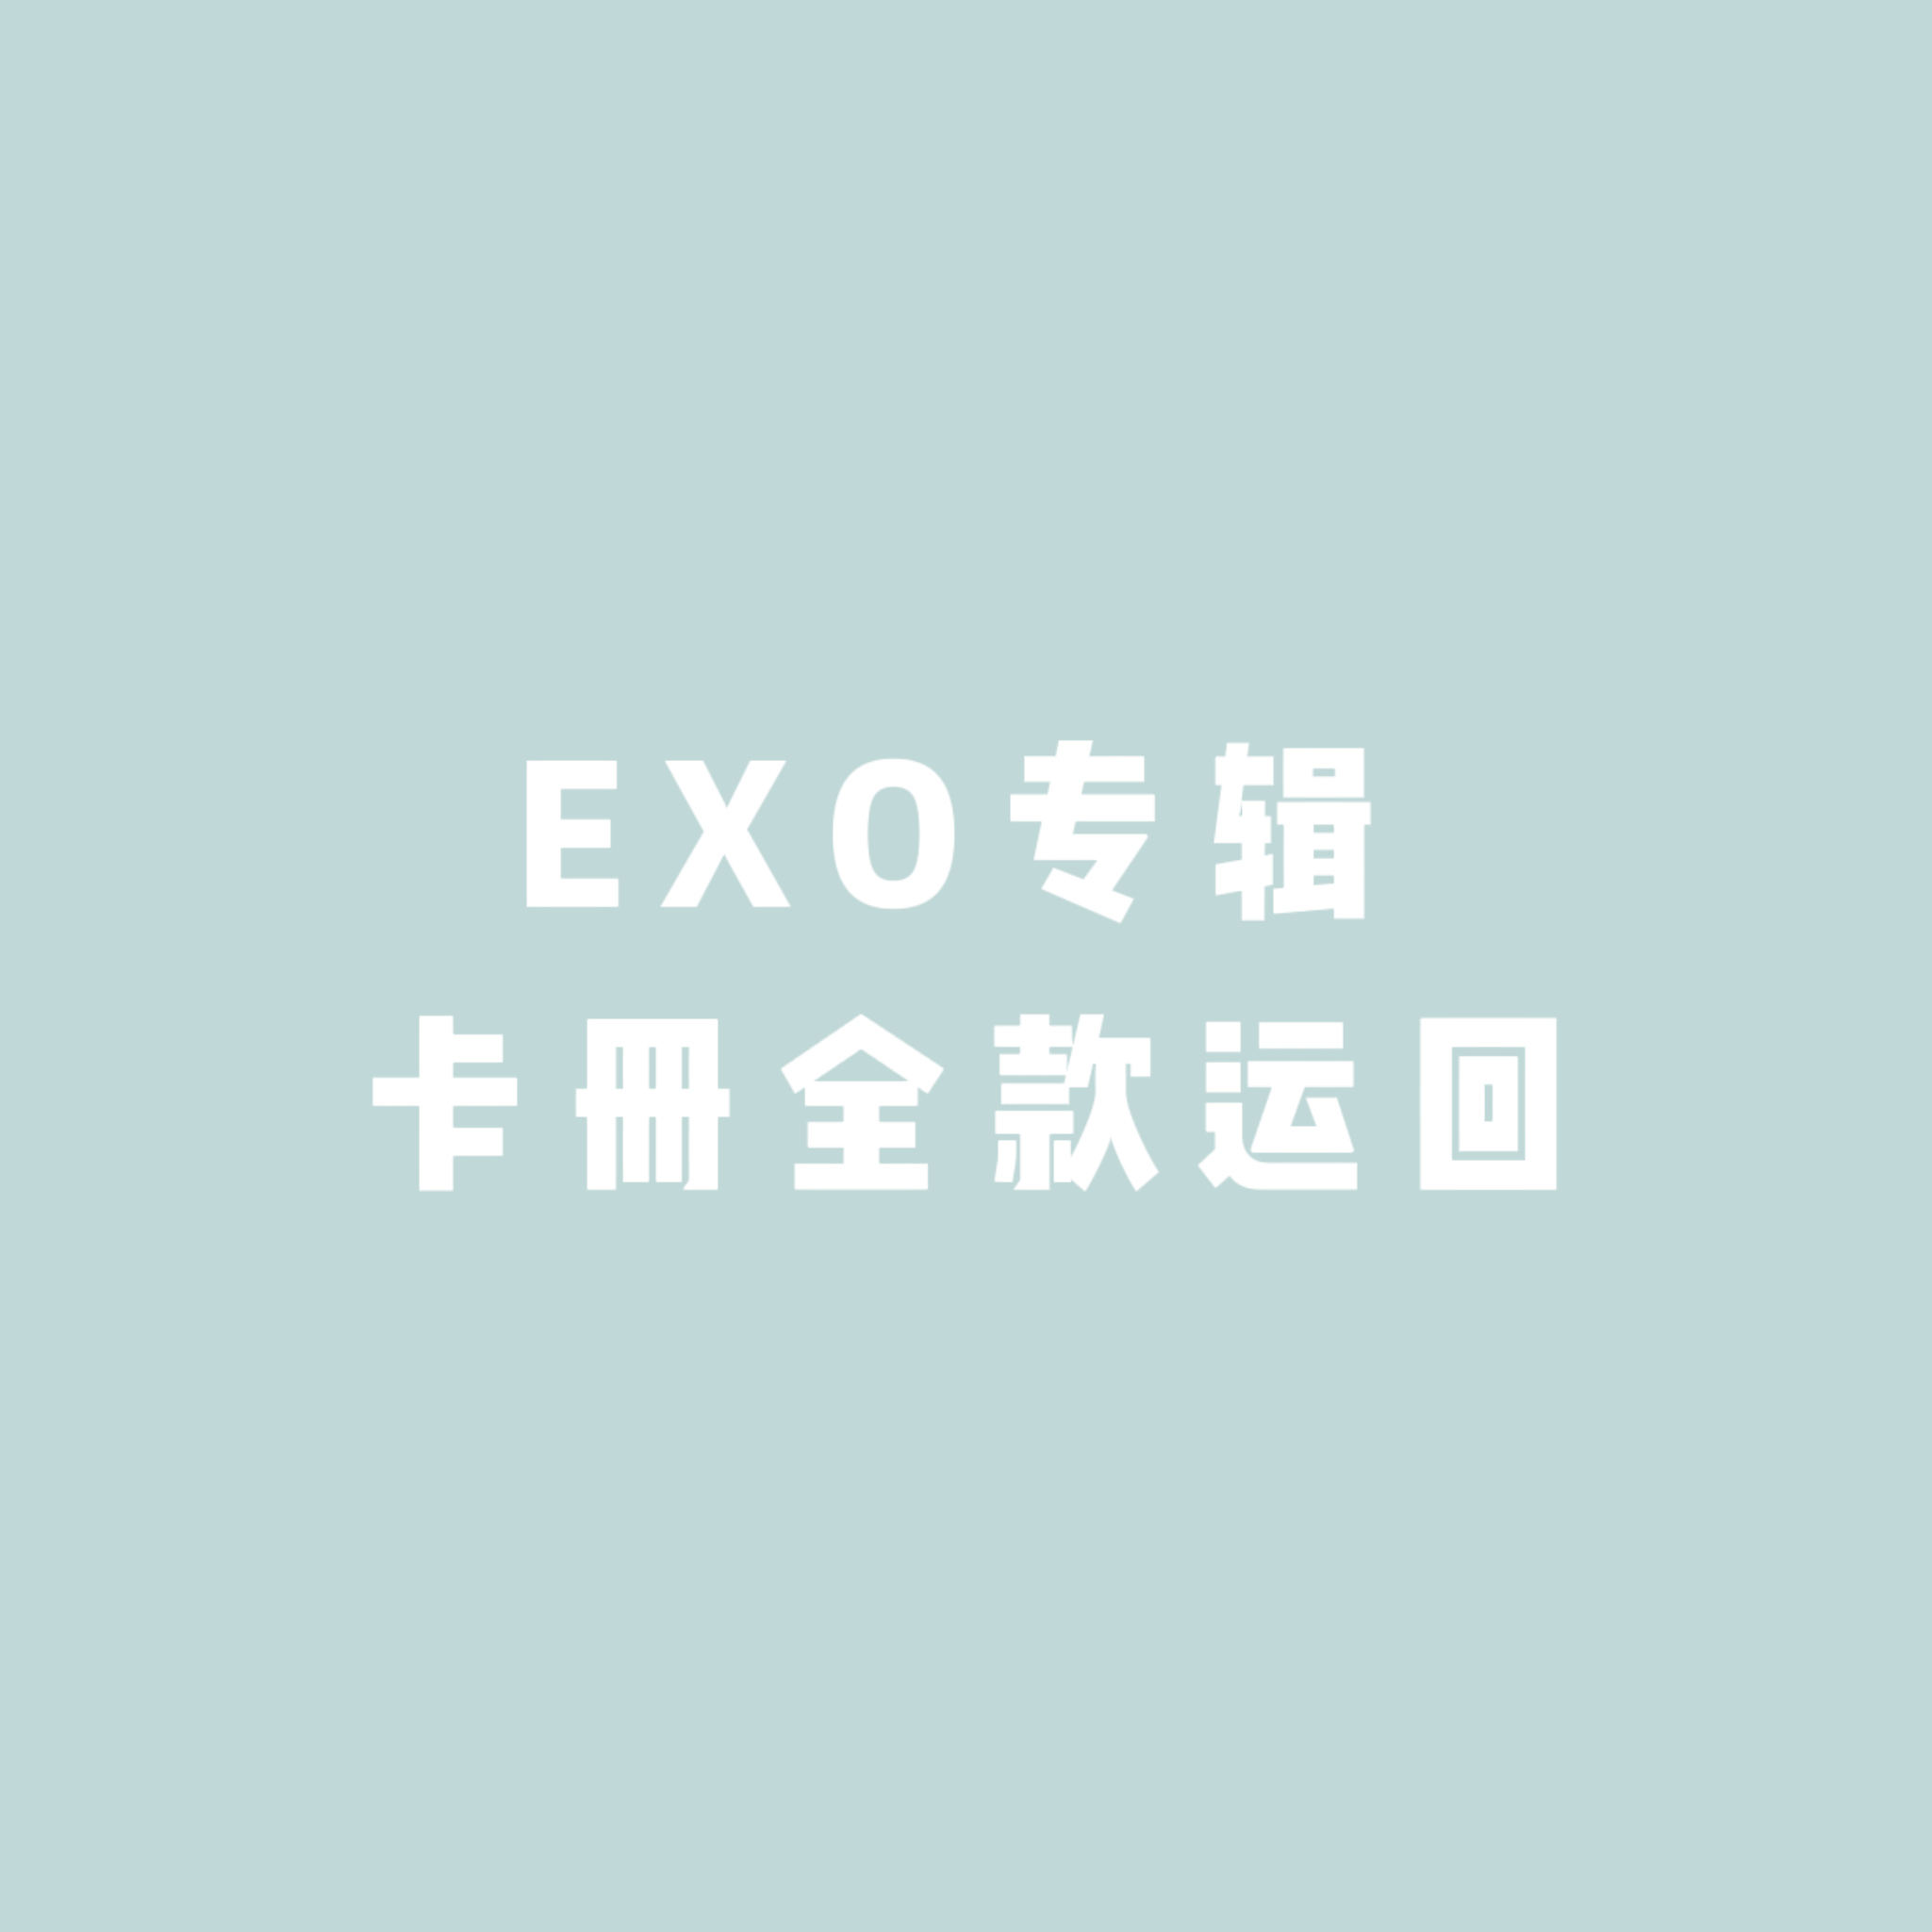 [全款 卡册] EXO - Special Album [DON’T FIGHT THE FEELING]_EXO-Eternal永恒站